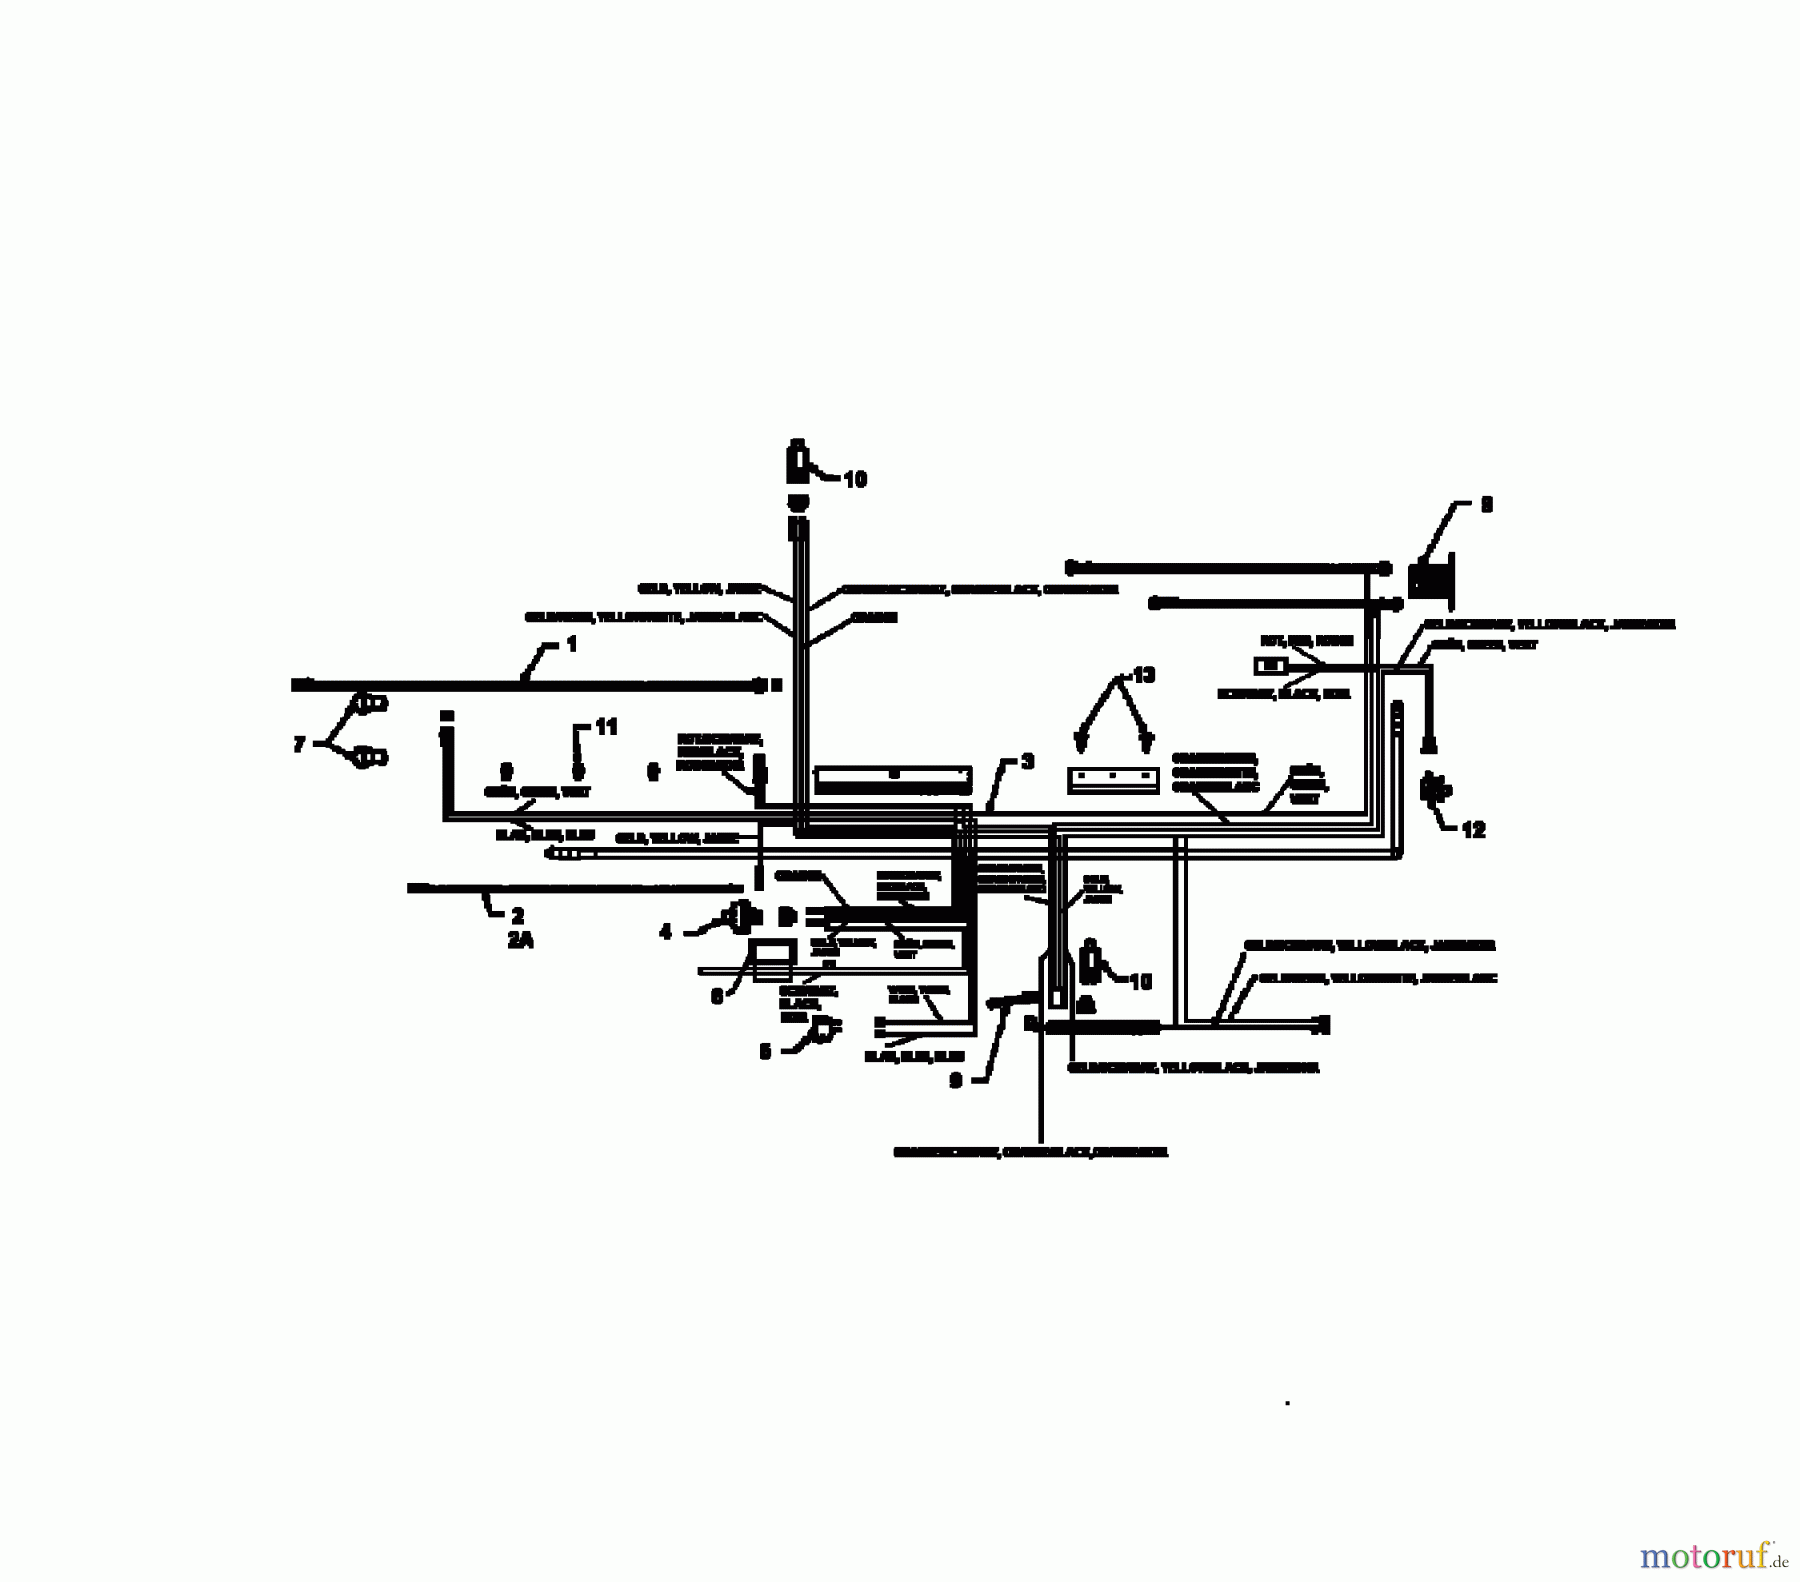  Edt Rasentraktoren EDT 130-102 13AN762N610  (1997) Schaltplan Vanguard